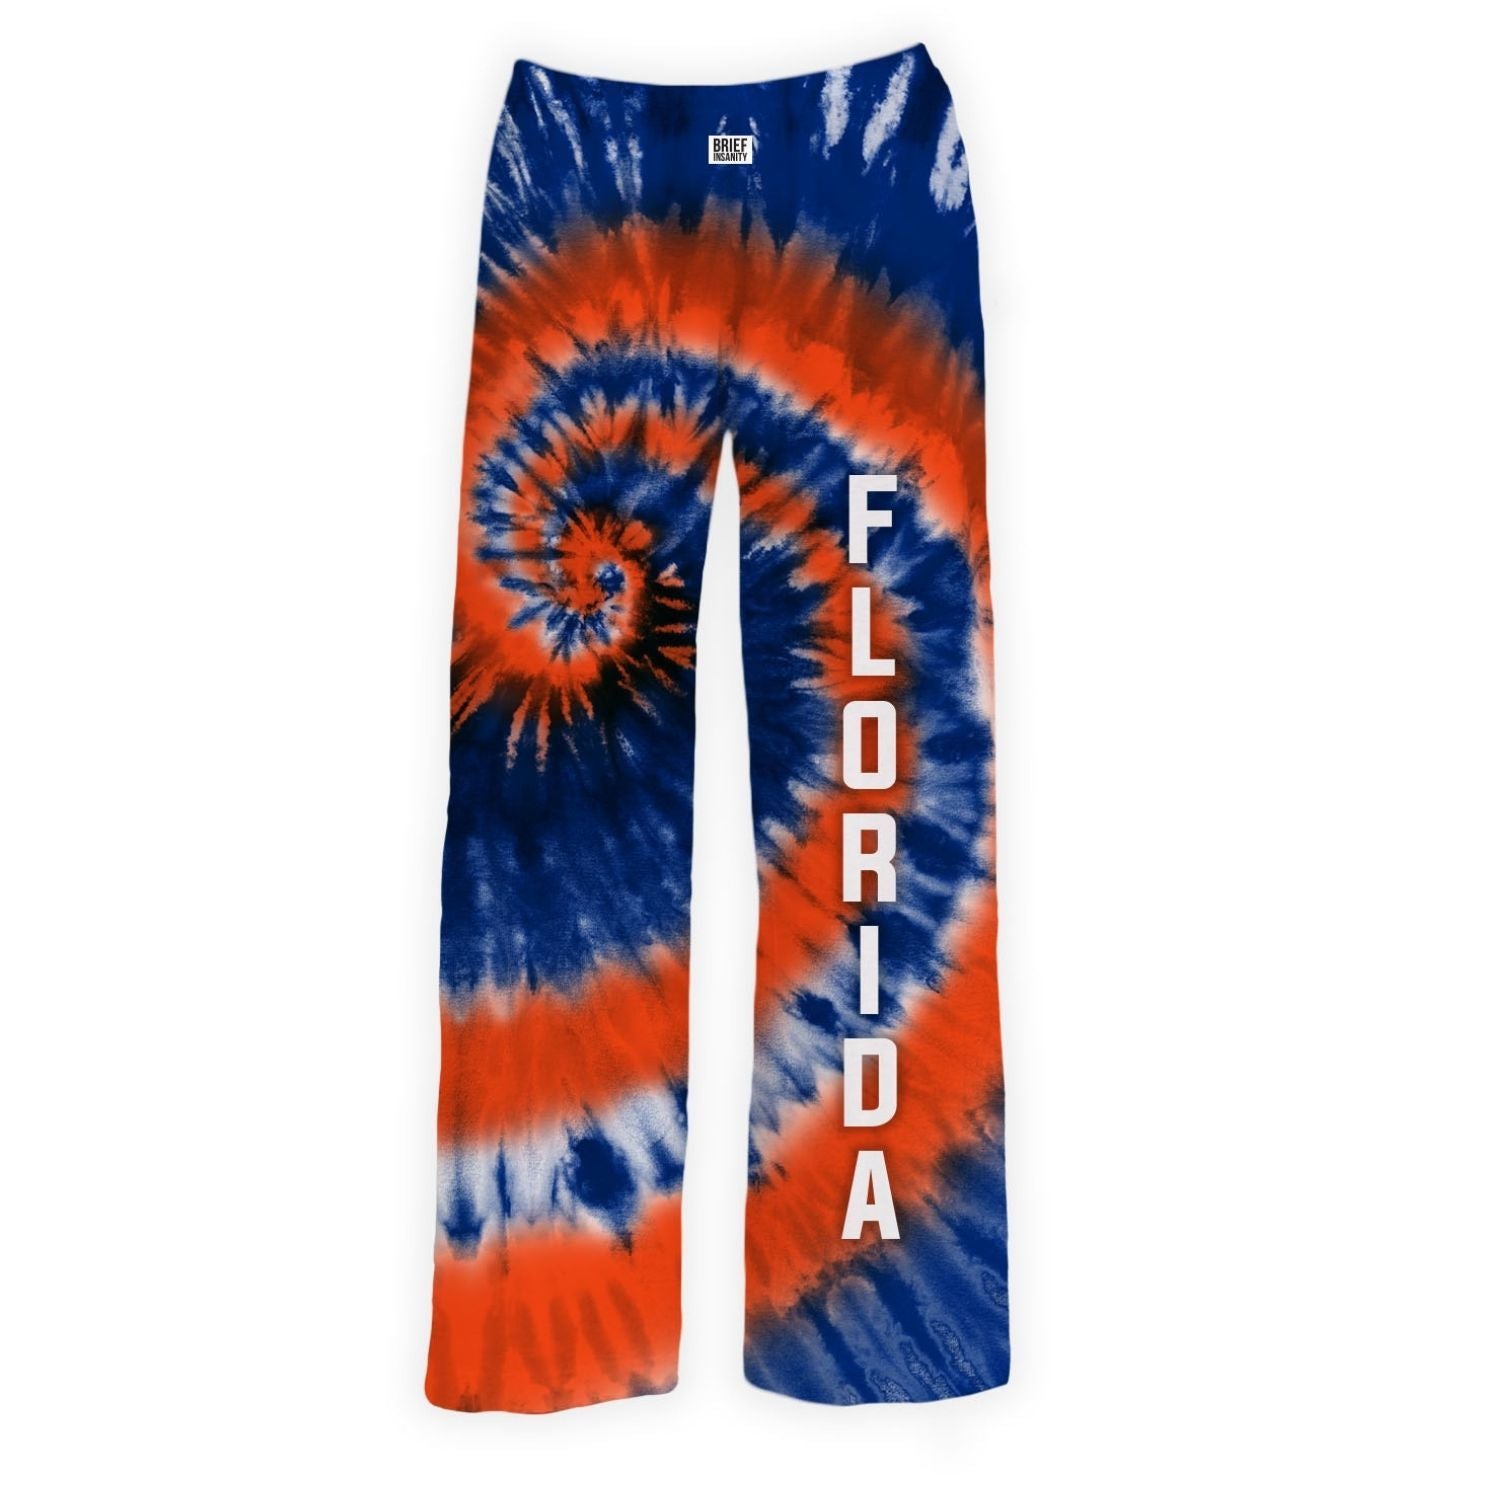 Florida Tie-Dye Pants Pajama Pants